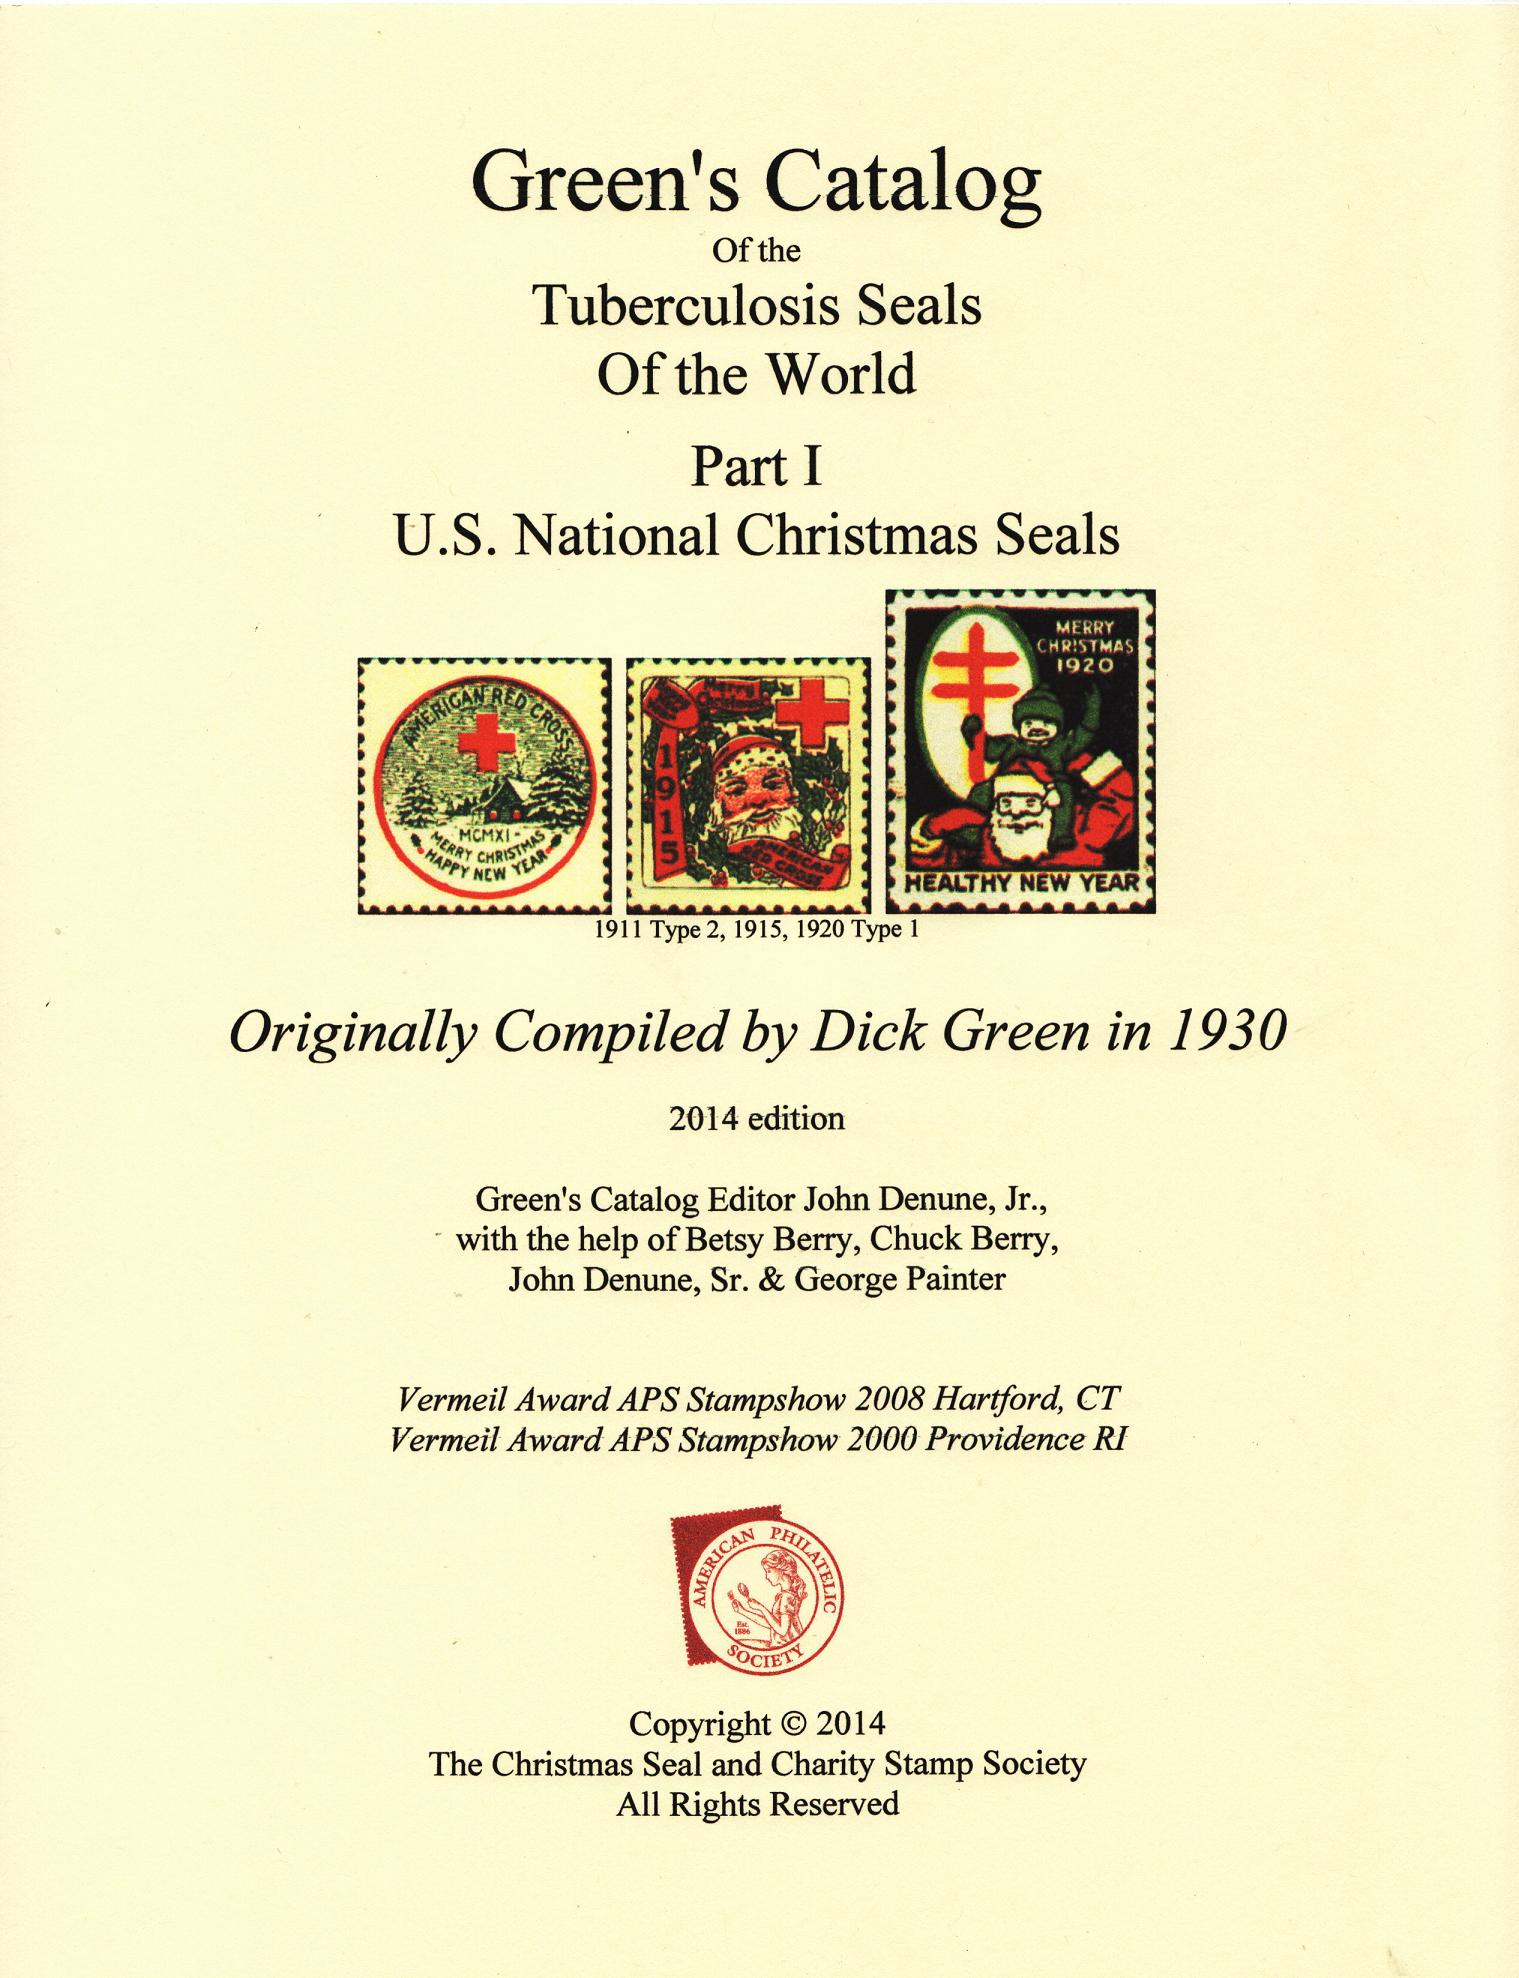  Green's Catalog, TB Seals, Part 1, U.S. National Christmas Seals, 2014 ed.